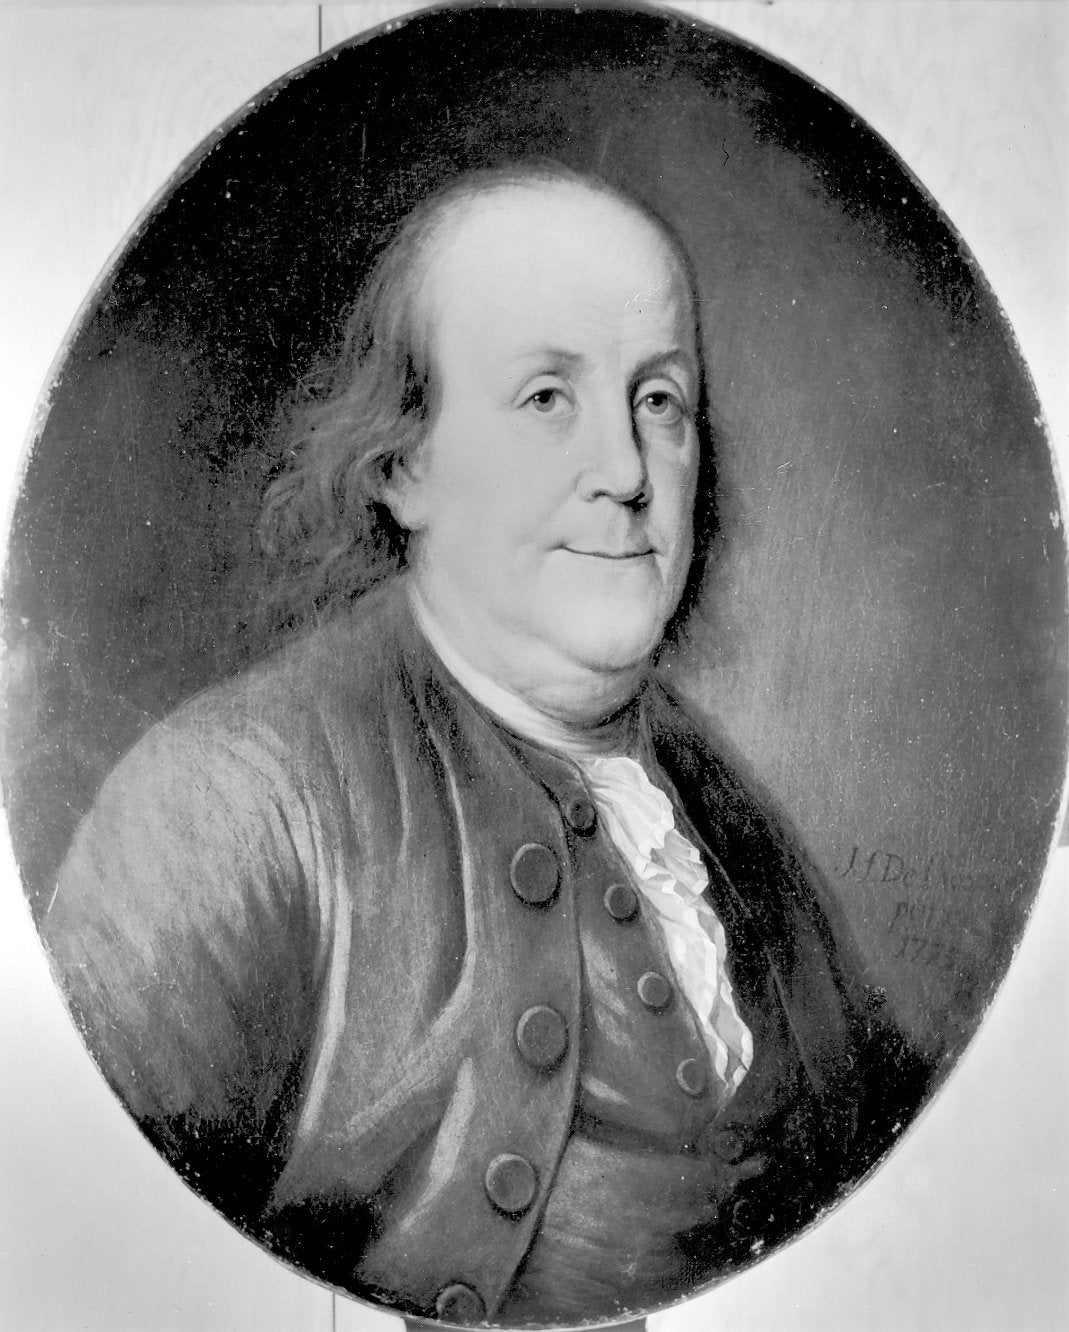 Benjamin Franklin, portrait painting